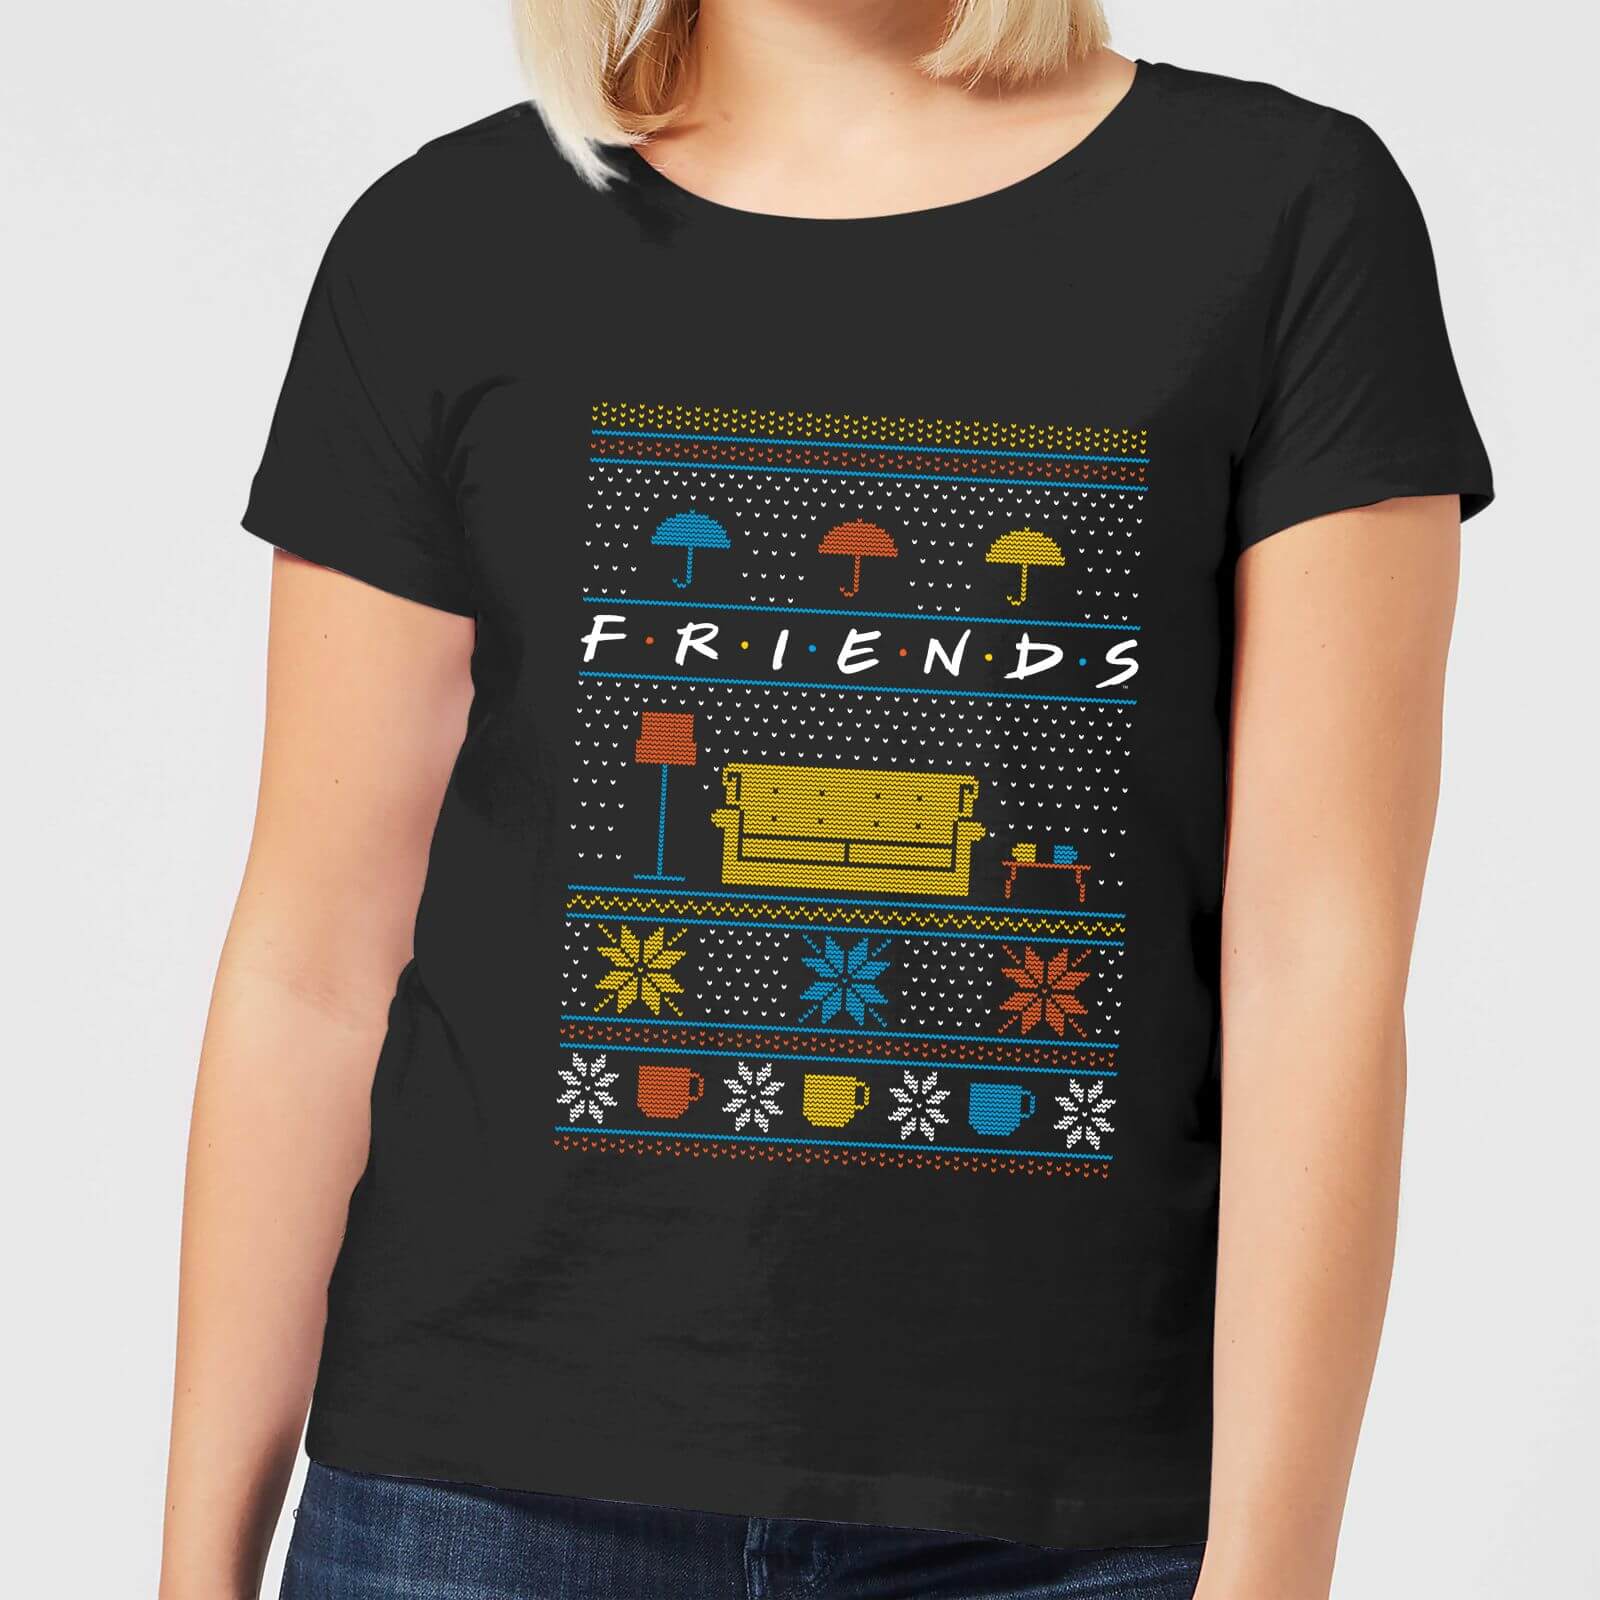 Friends sofa knit women's christmas t-shirt - black - m